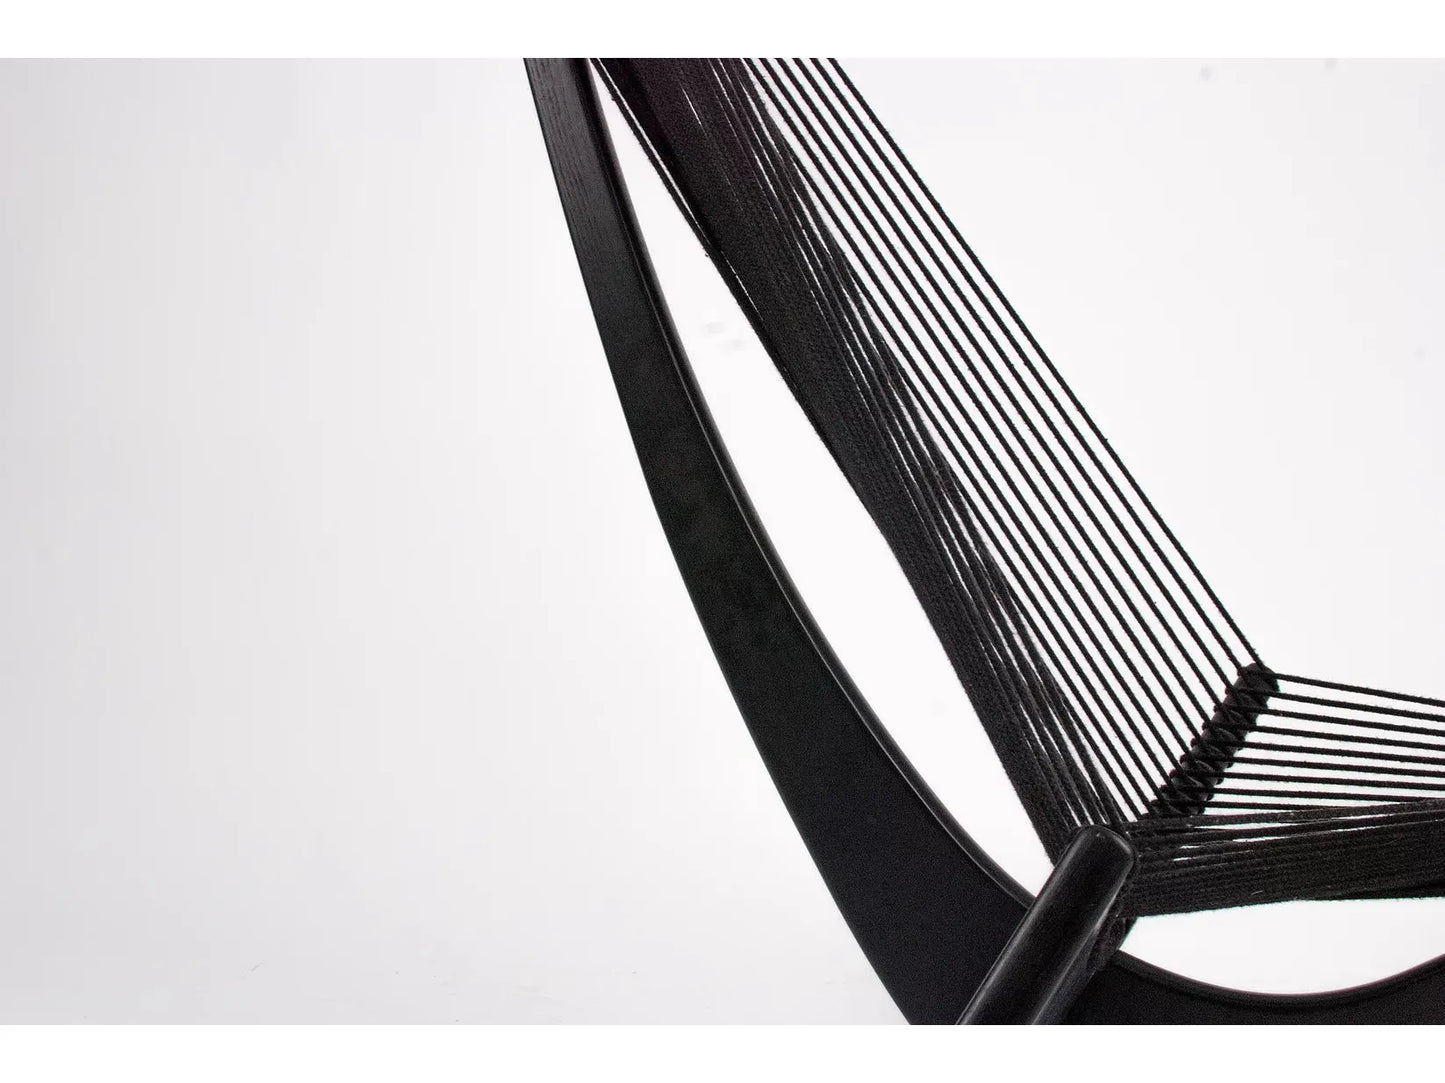 Harp Chair by Jørgen Høvelskov for Christensen & Larsen Møbelhandværk